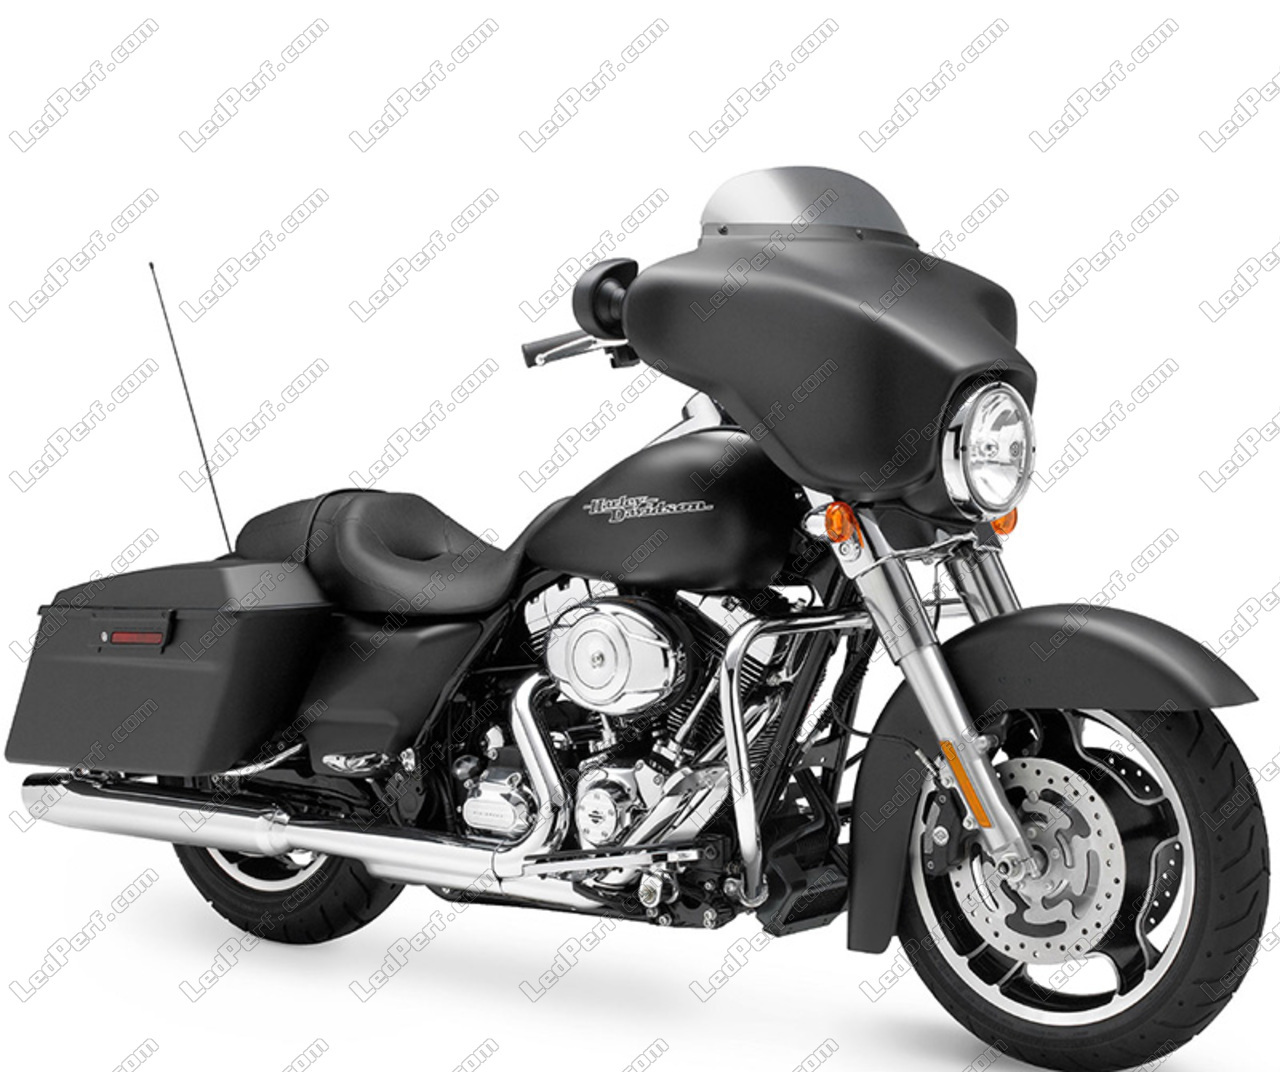 Sequentielle Dynamische Led Blinker Fur Harley Davidson Street Glide 1690 2011 2013